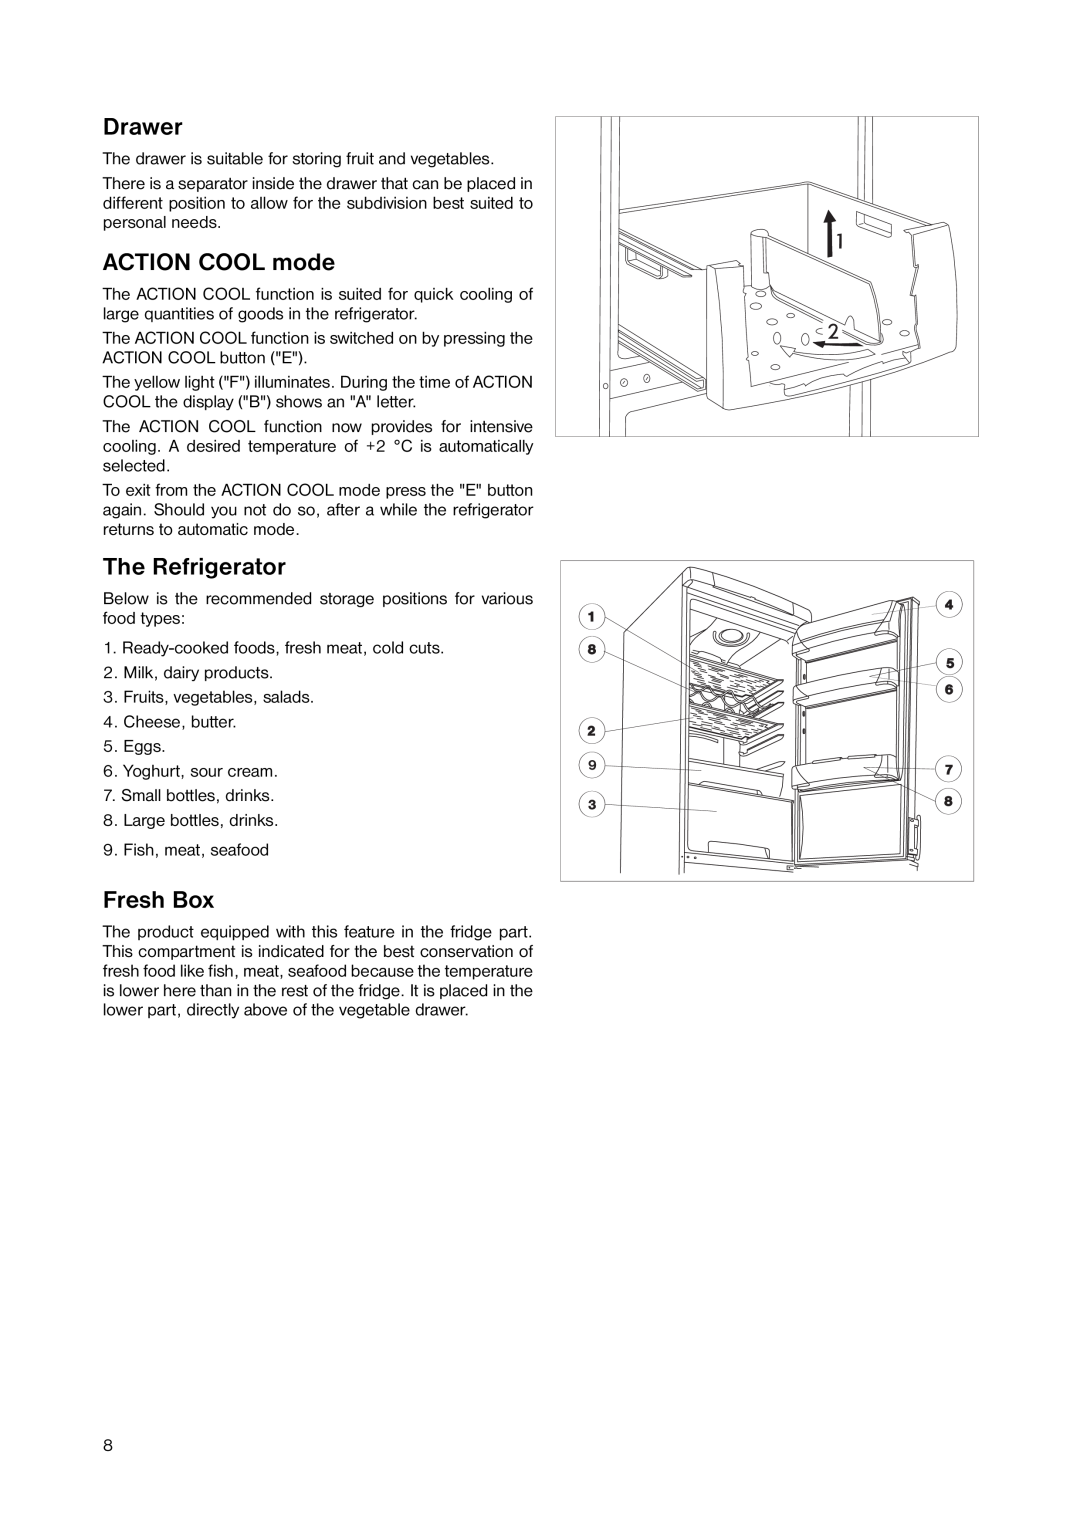 Zanussi ZNB 4051 manual Drawer, ACTION COOL mode, The Refrigerator, Fresh Box 